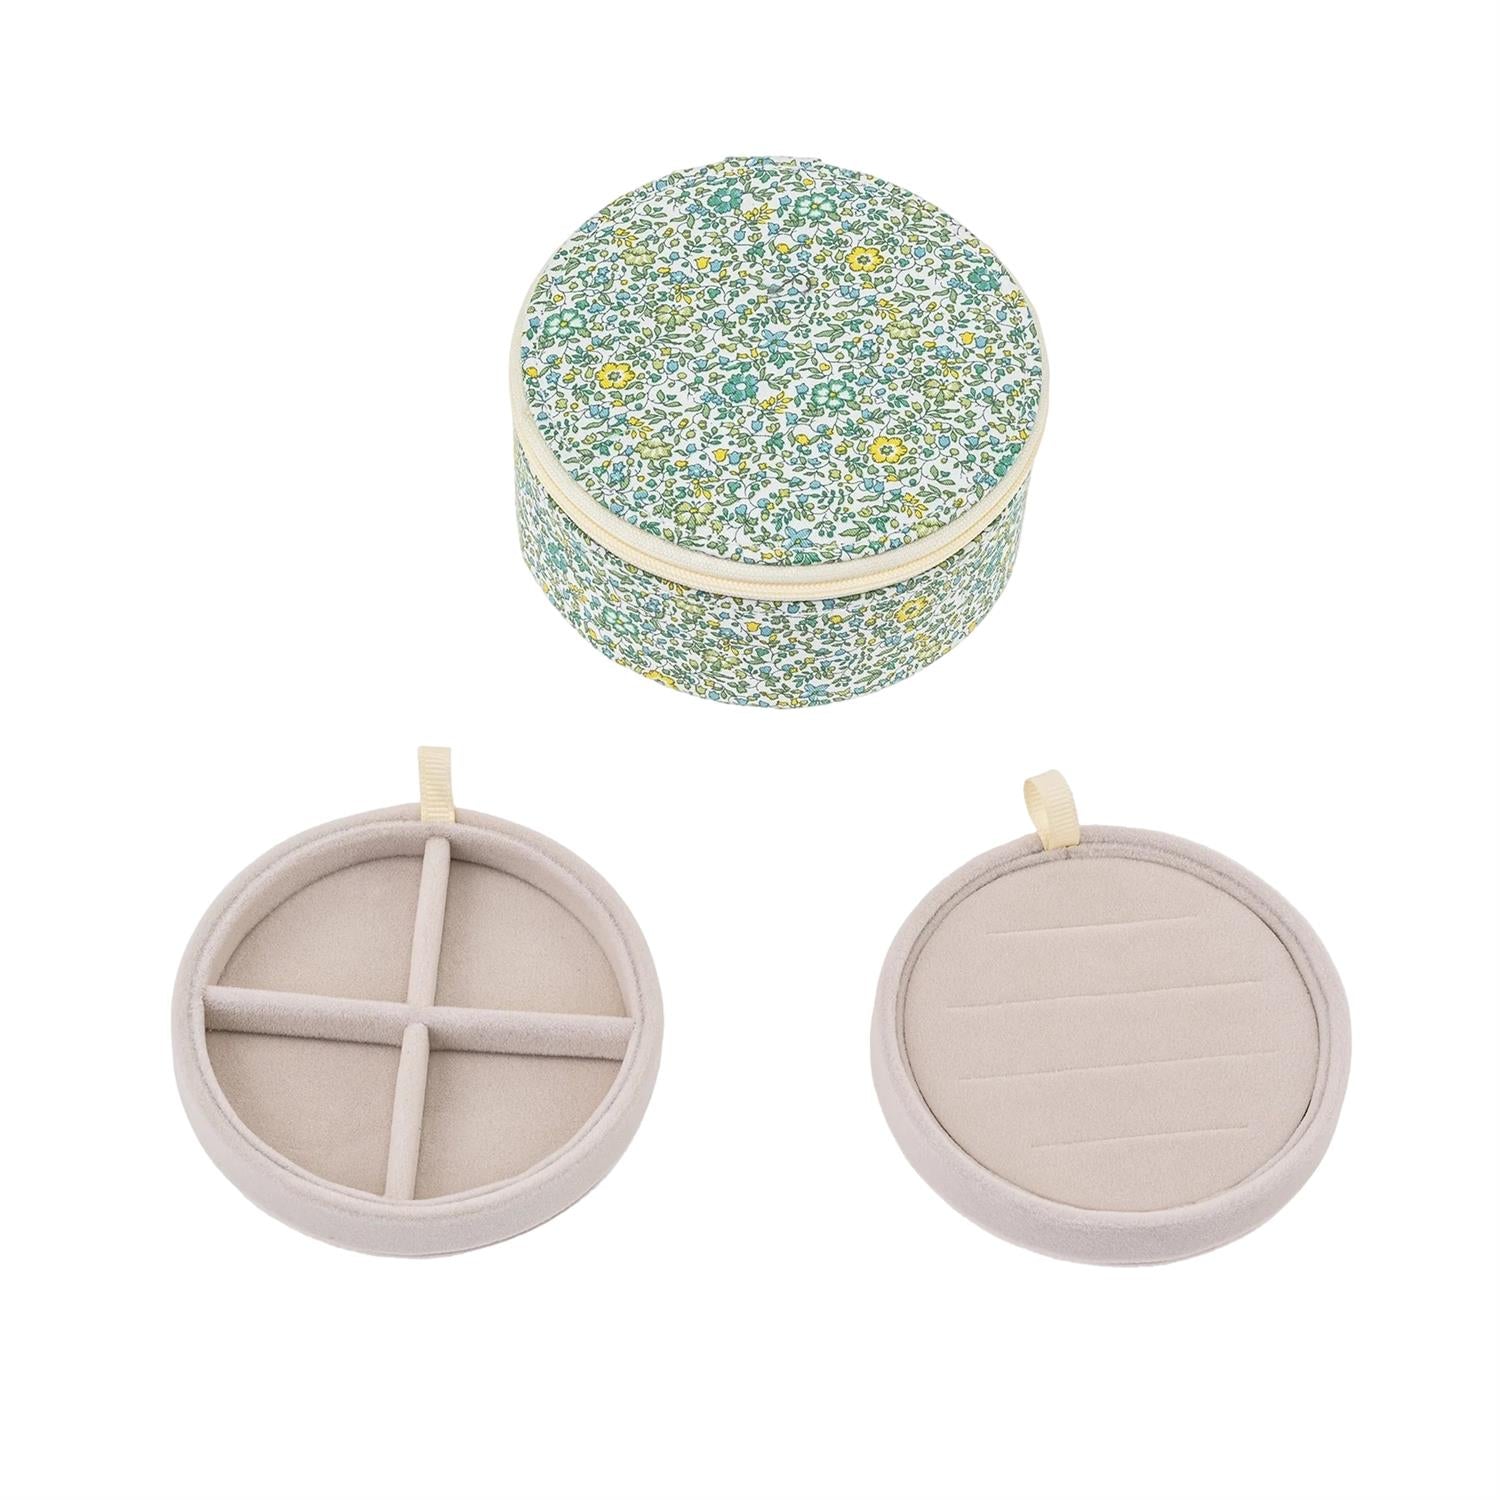 Bon Dep Jewelry Box Round Smykkeskrin Grønn Mønster